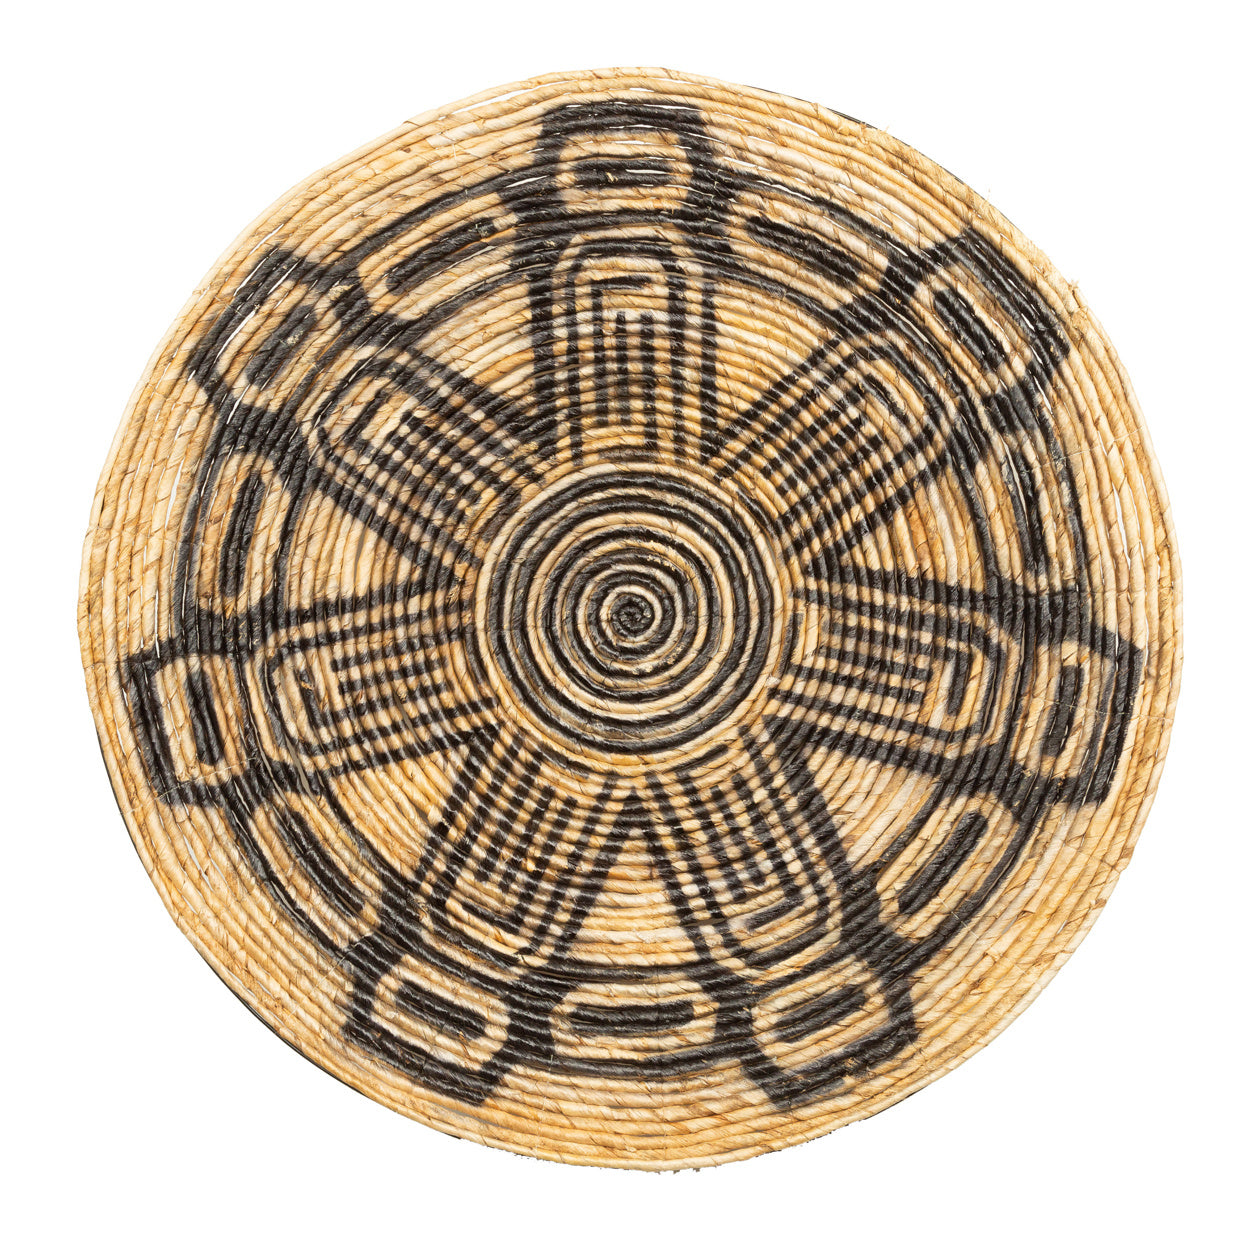 The Maya Plate 